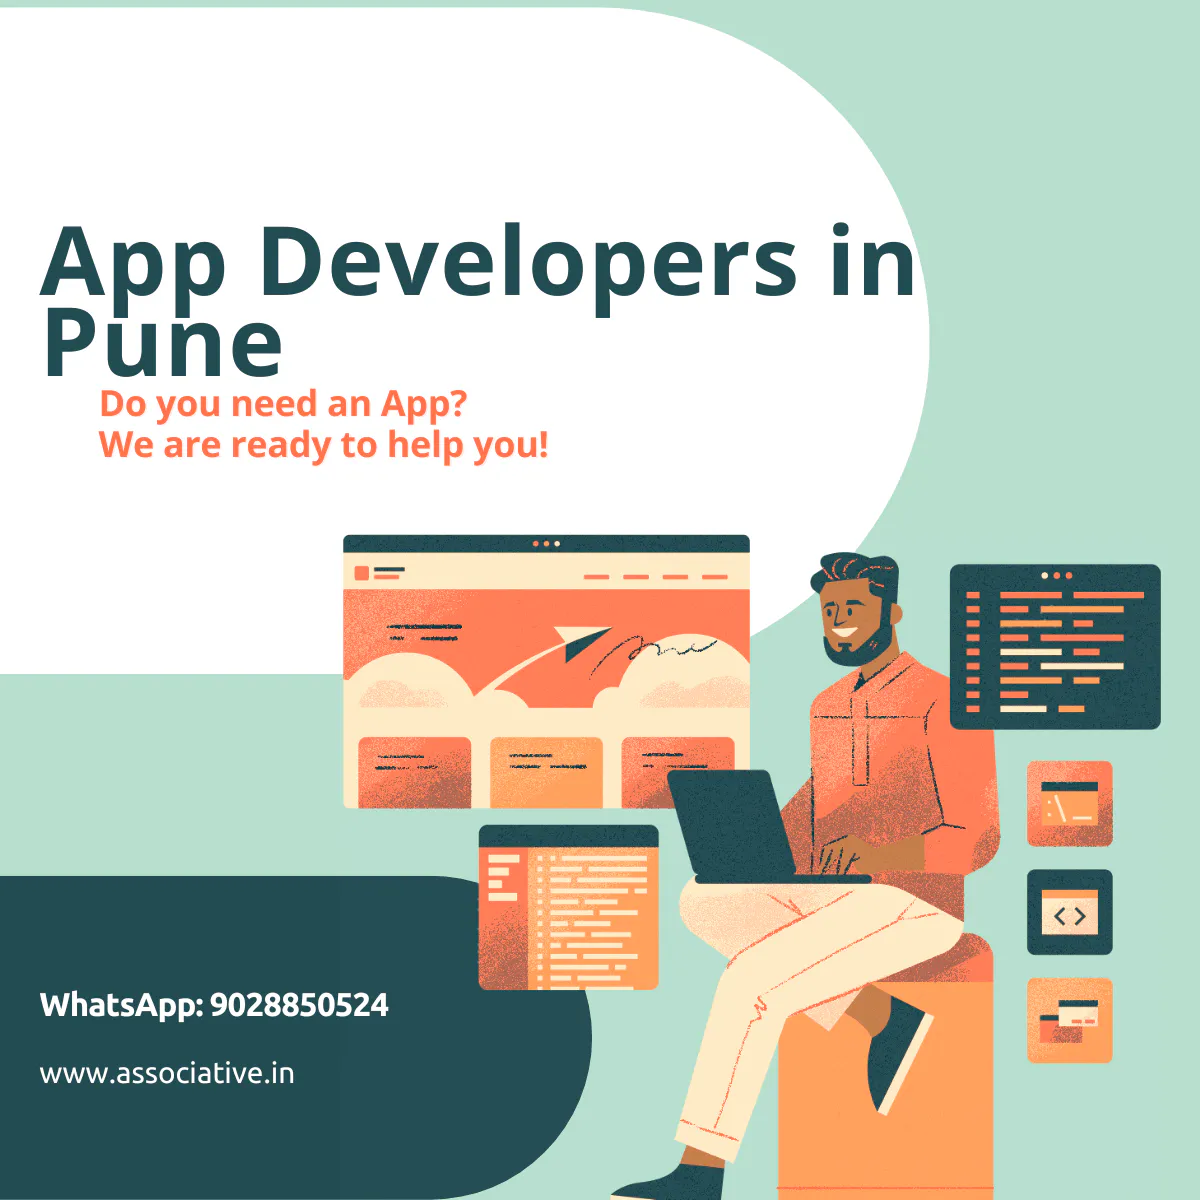 App Developers in Pune